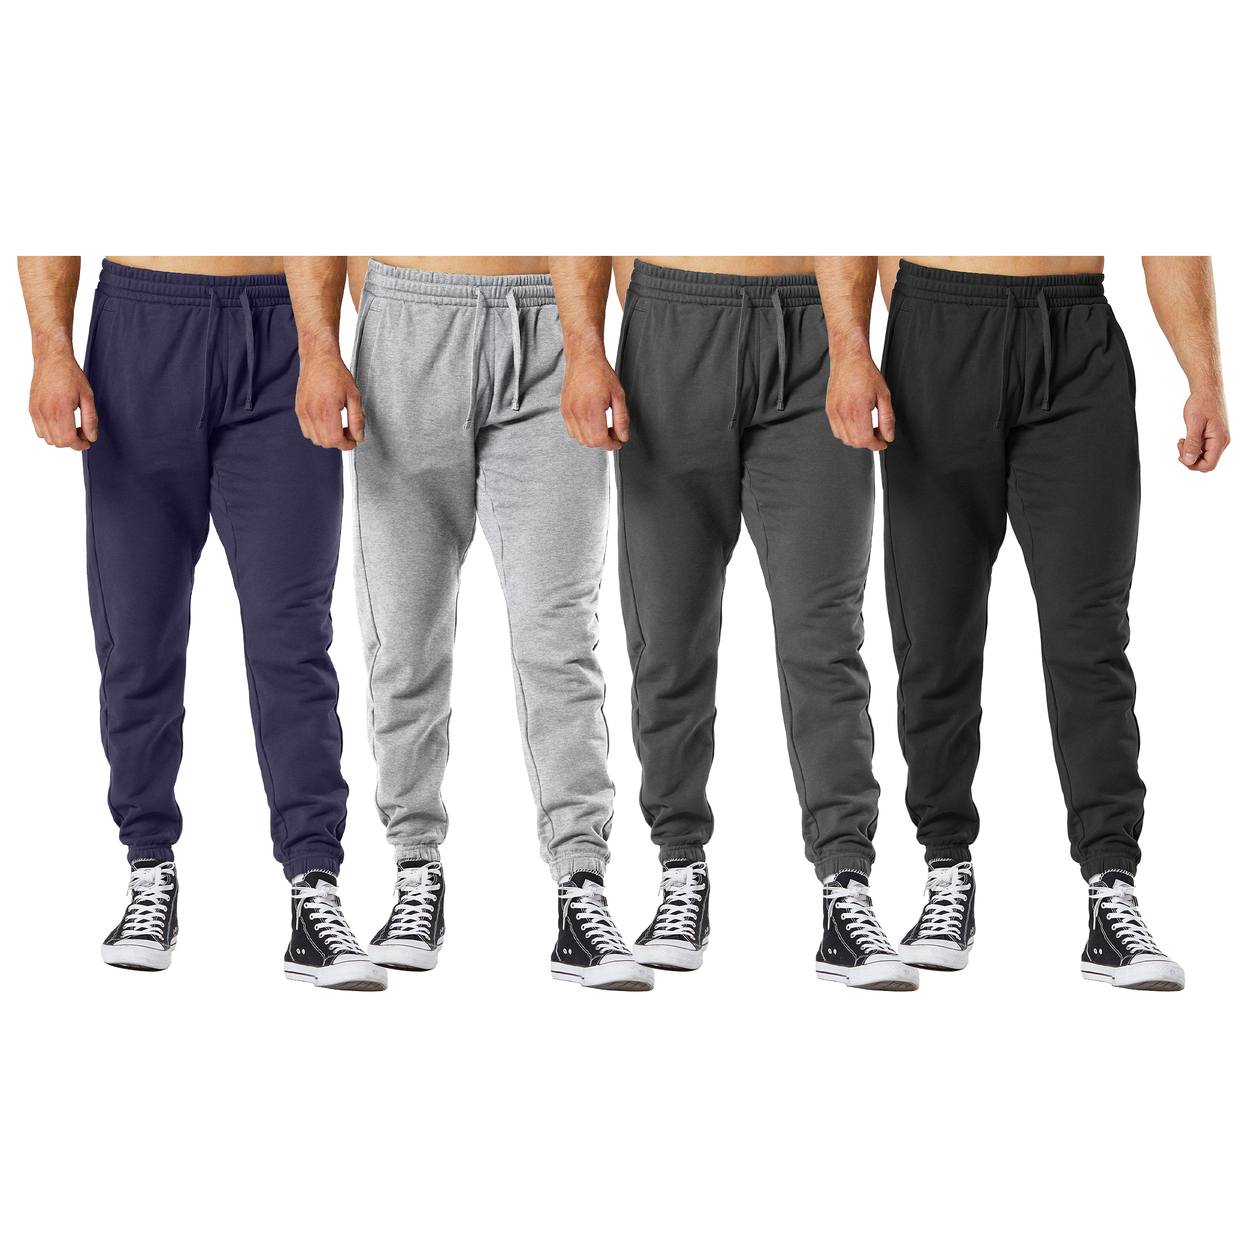 Men's Ultra-Soft Cozy Winter Warm Casual Fleece Lined Sweatpants Jogger - Black, Medium